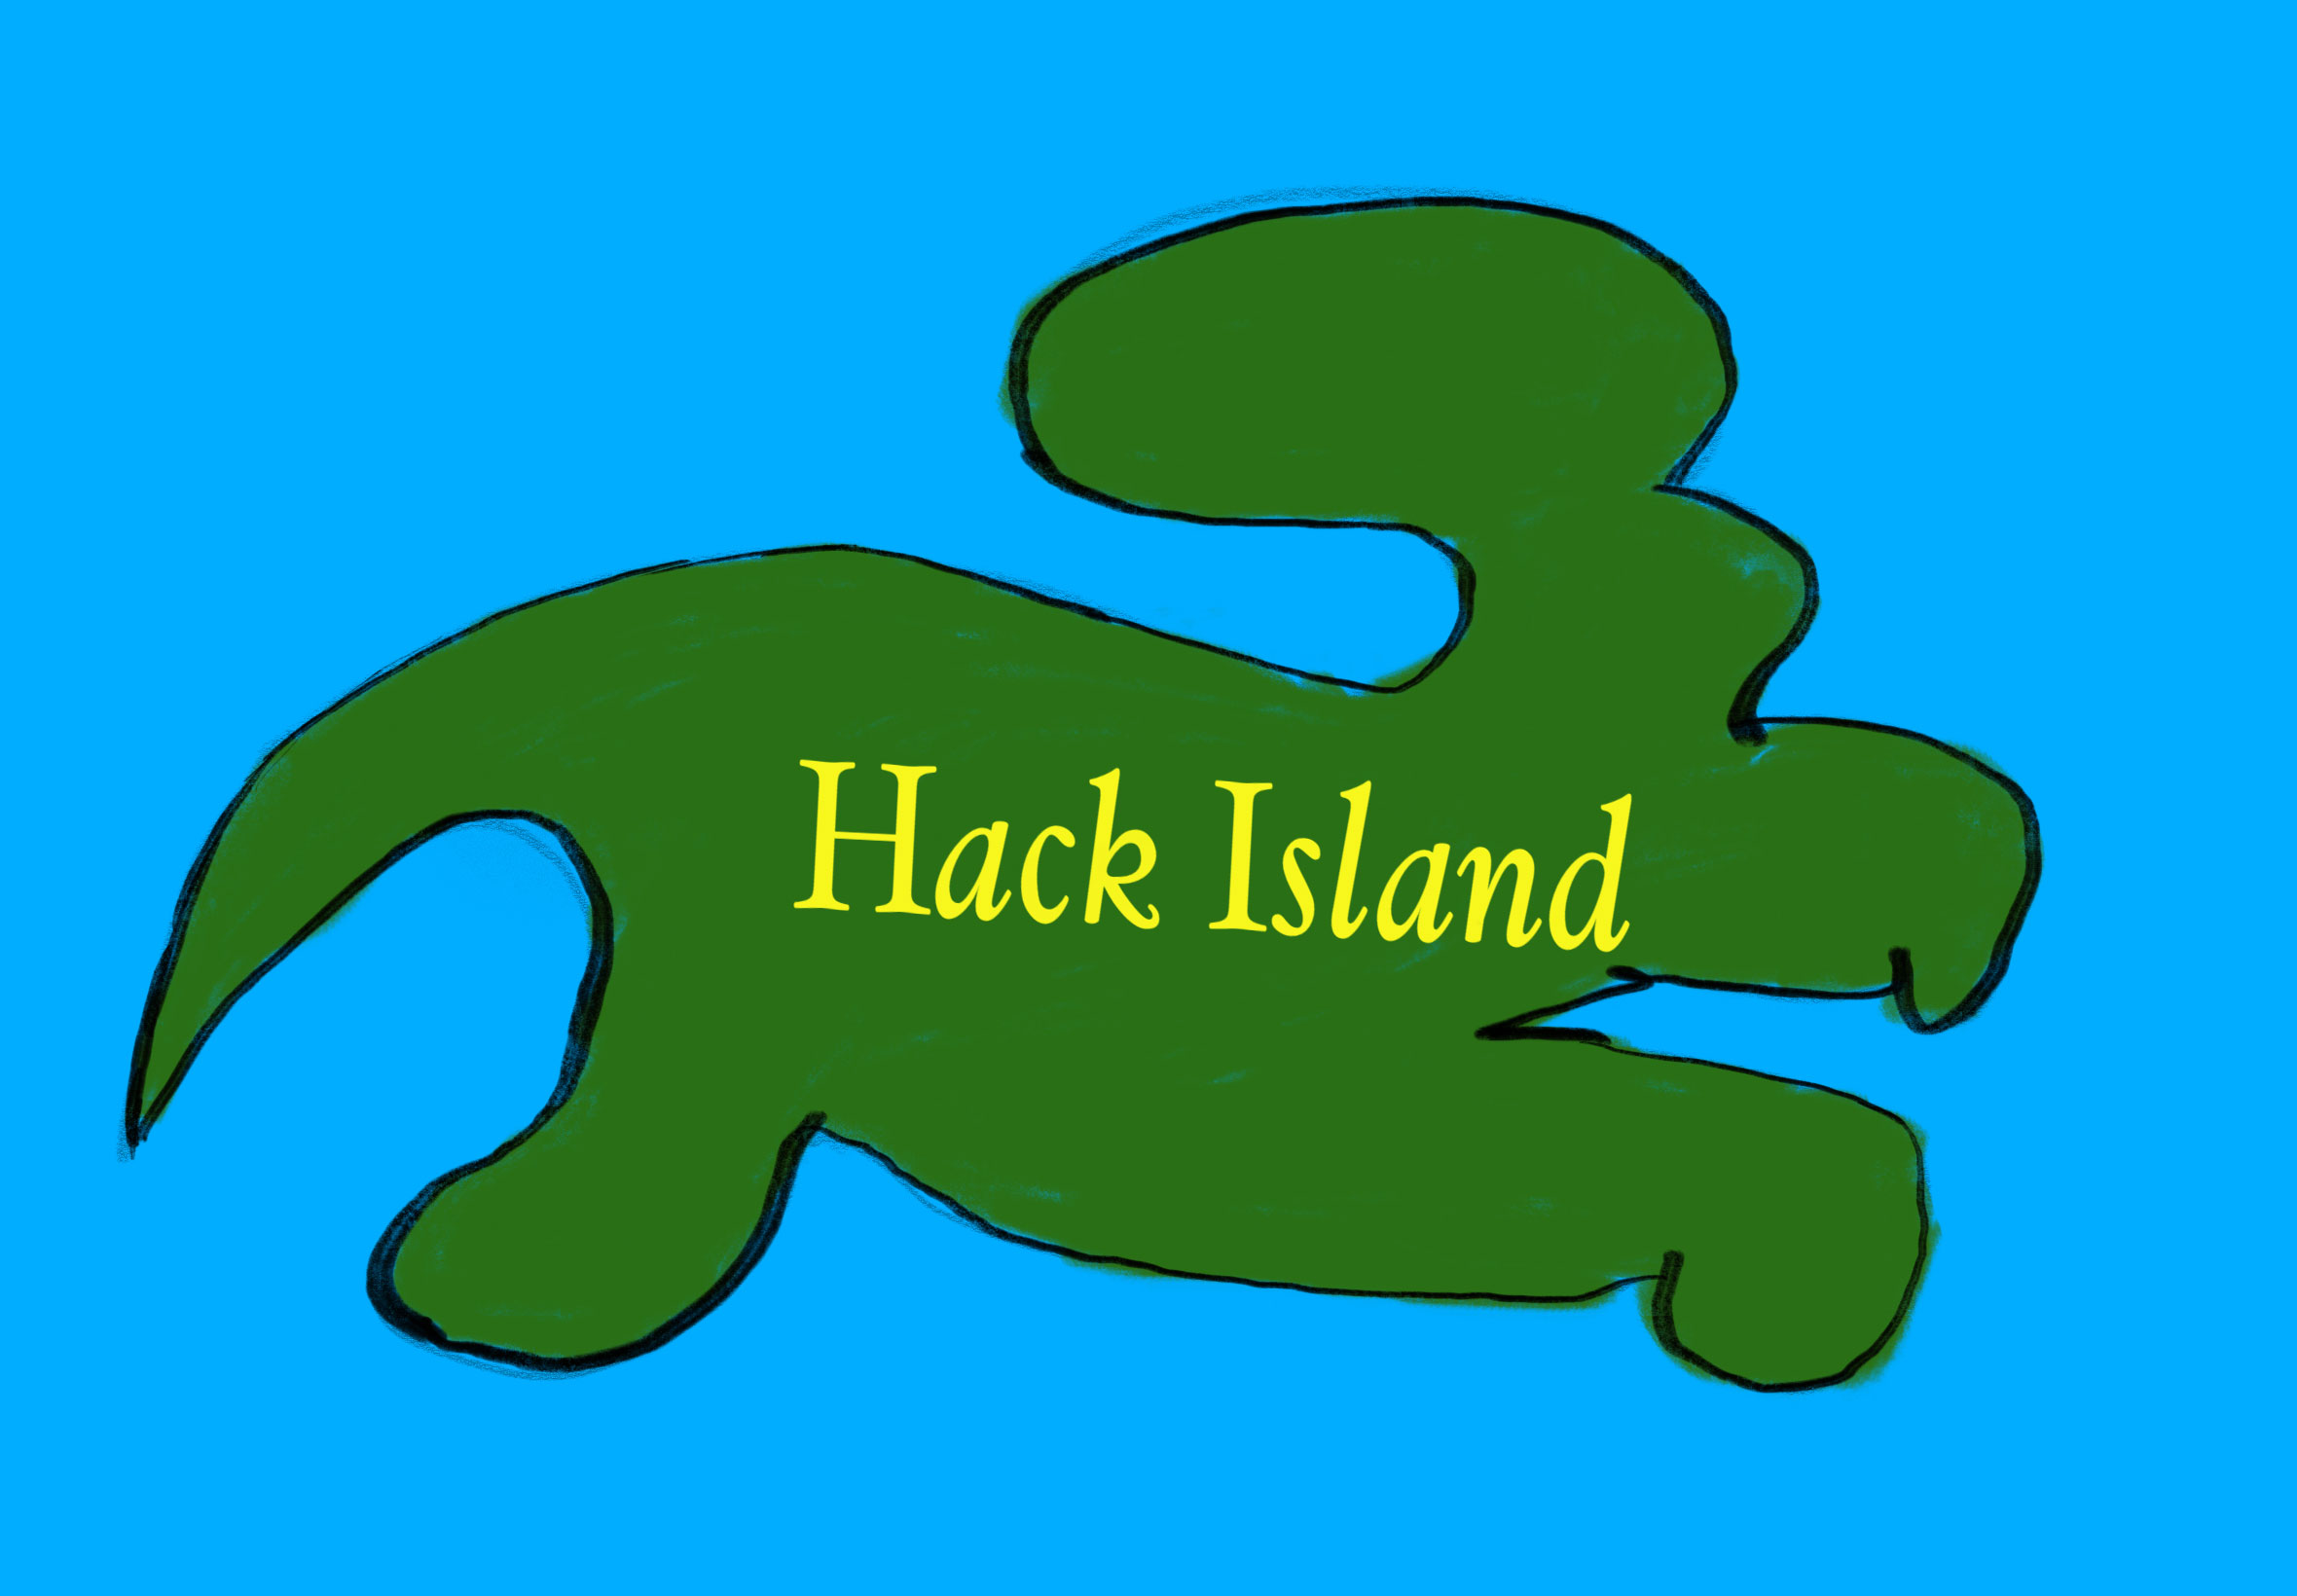 Hack Island image